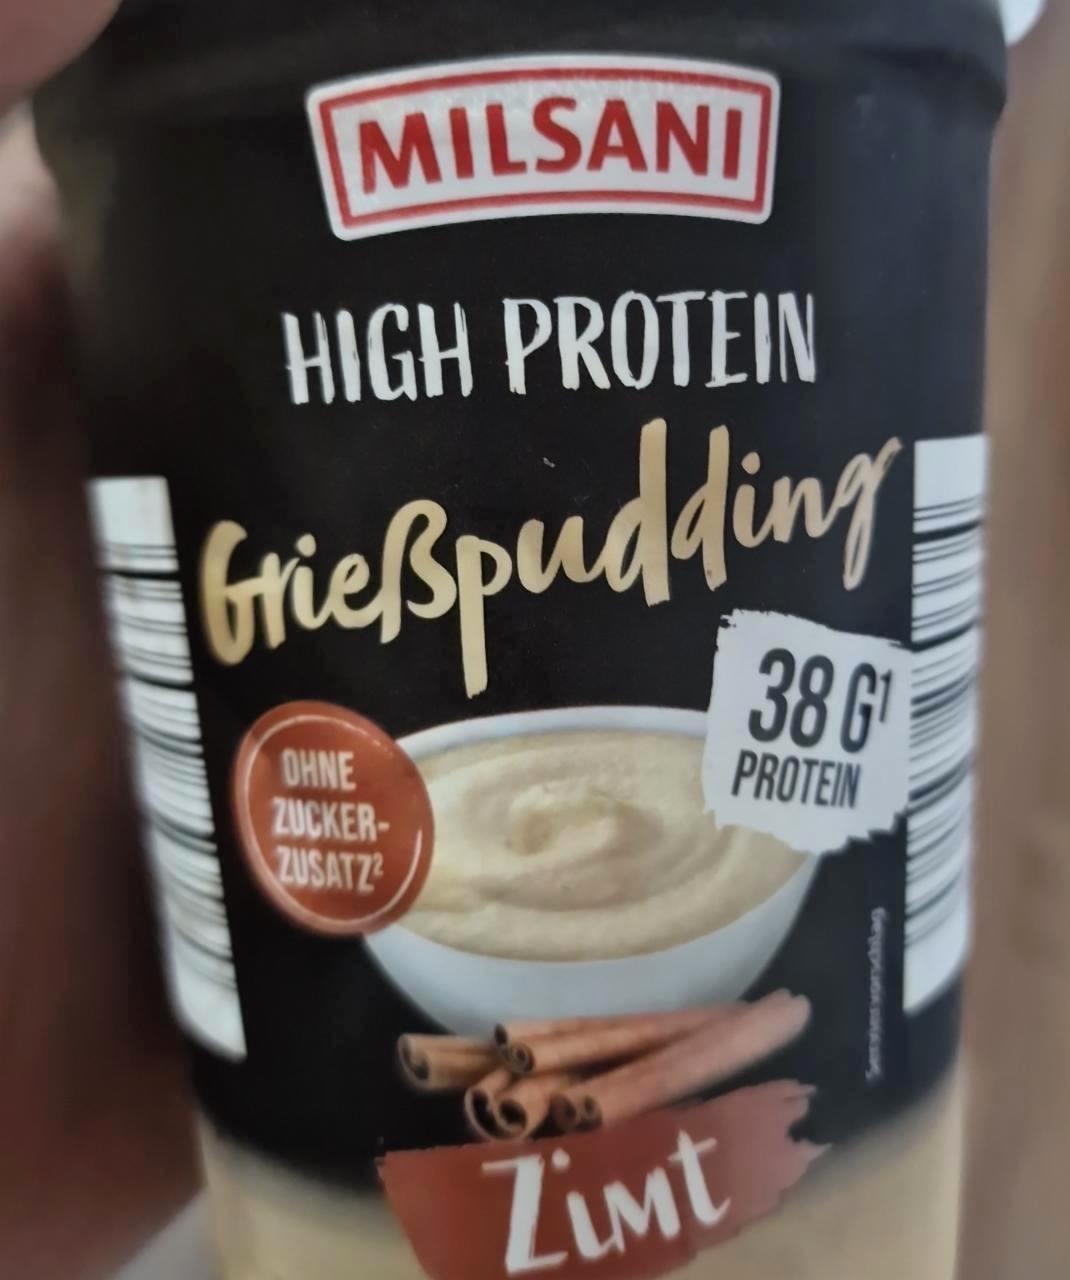 Képek - High protein grießpudding Milsani